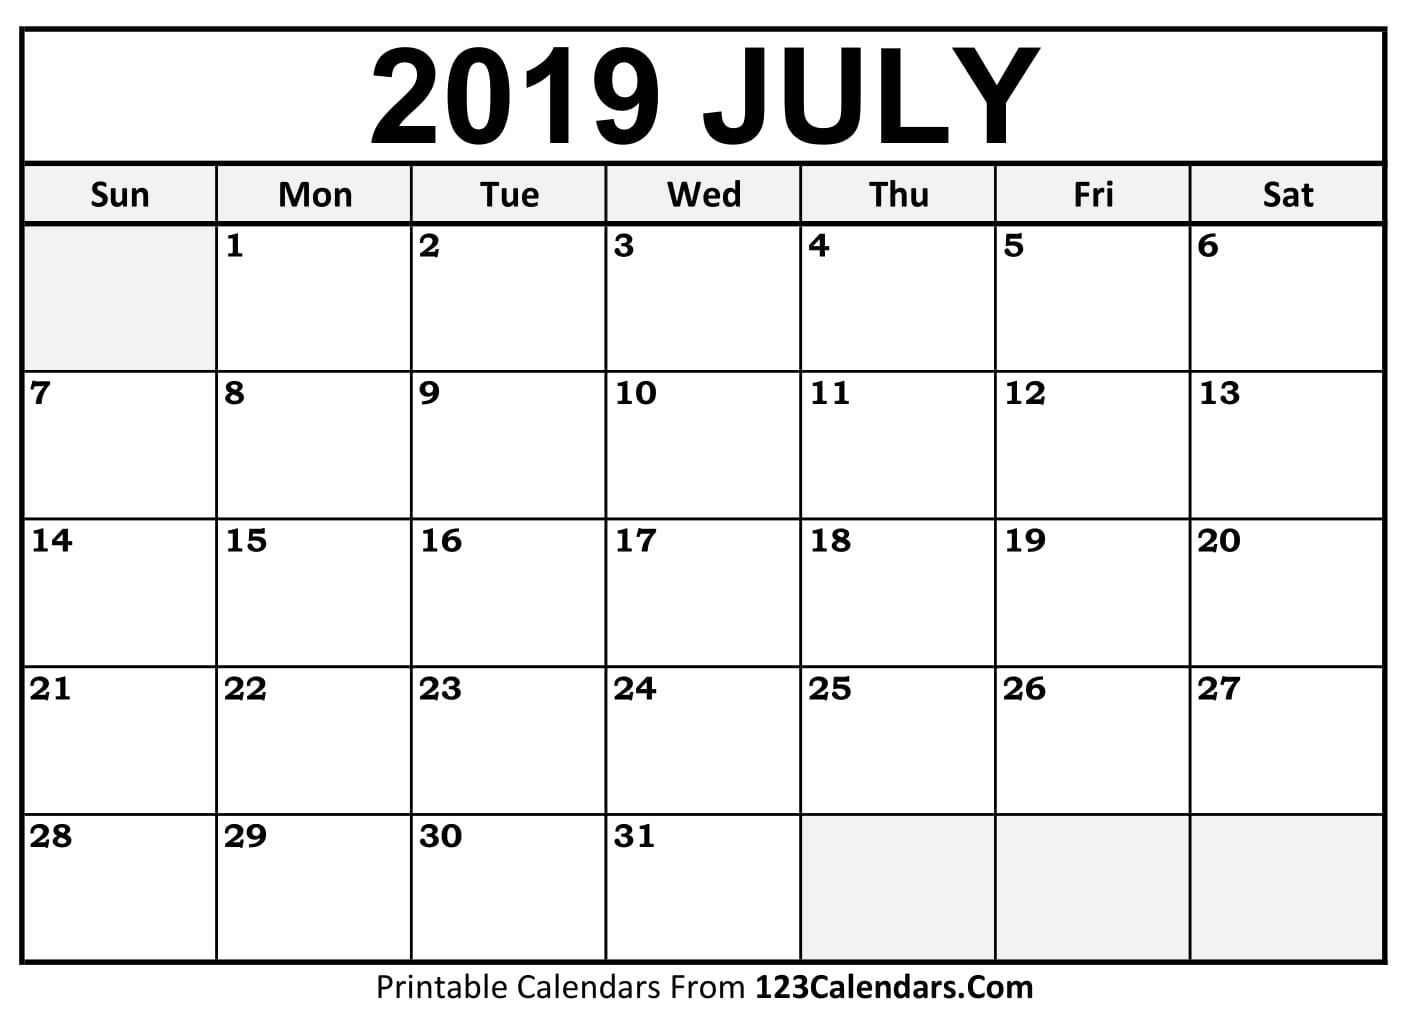 July Calendar Time Table